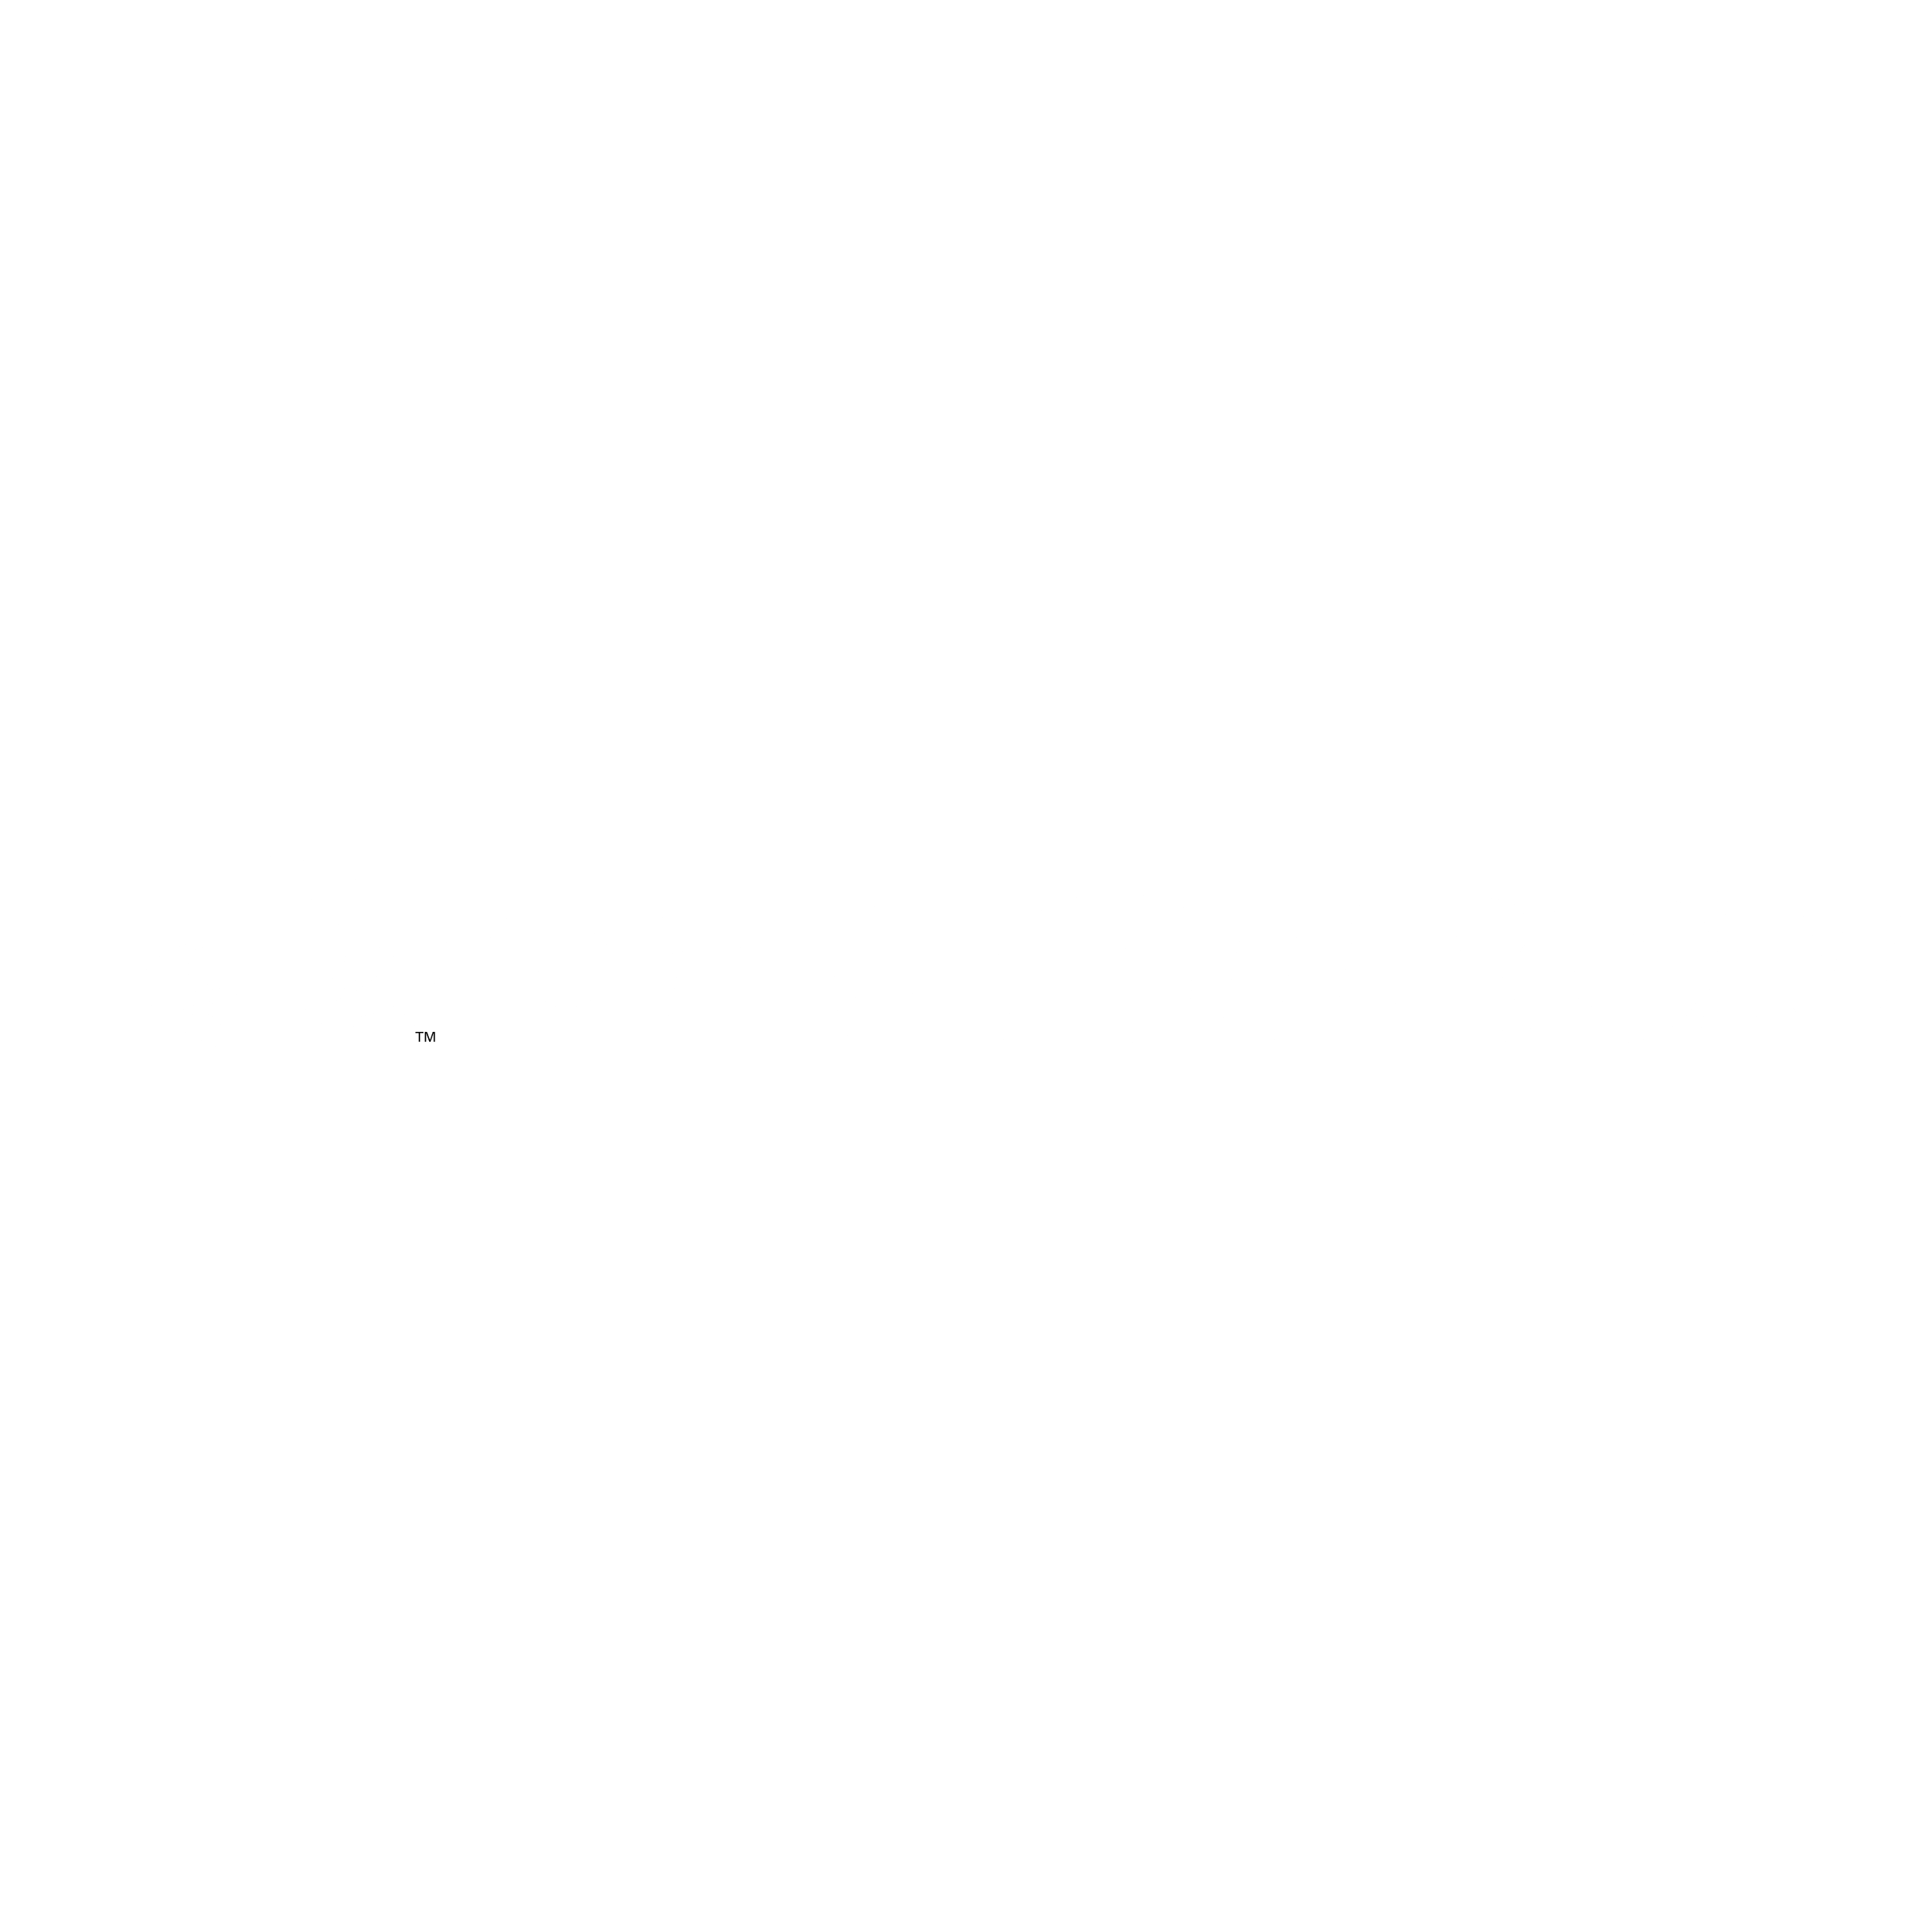 Crestron Logo - Crestron Logo PNG Transparent & SVG Vector - Freebie Supply